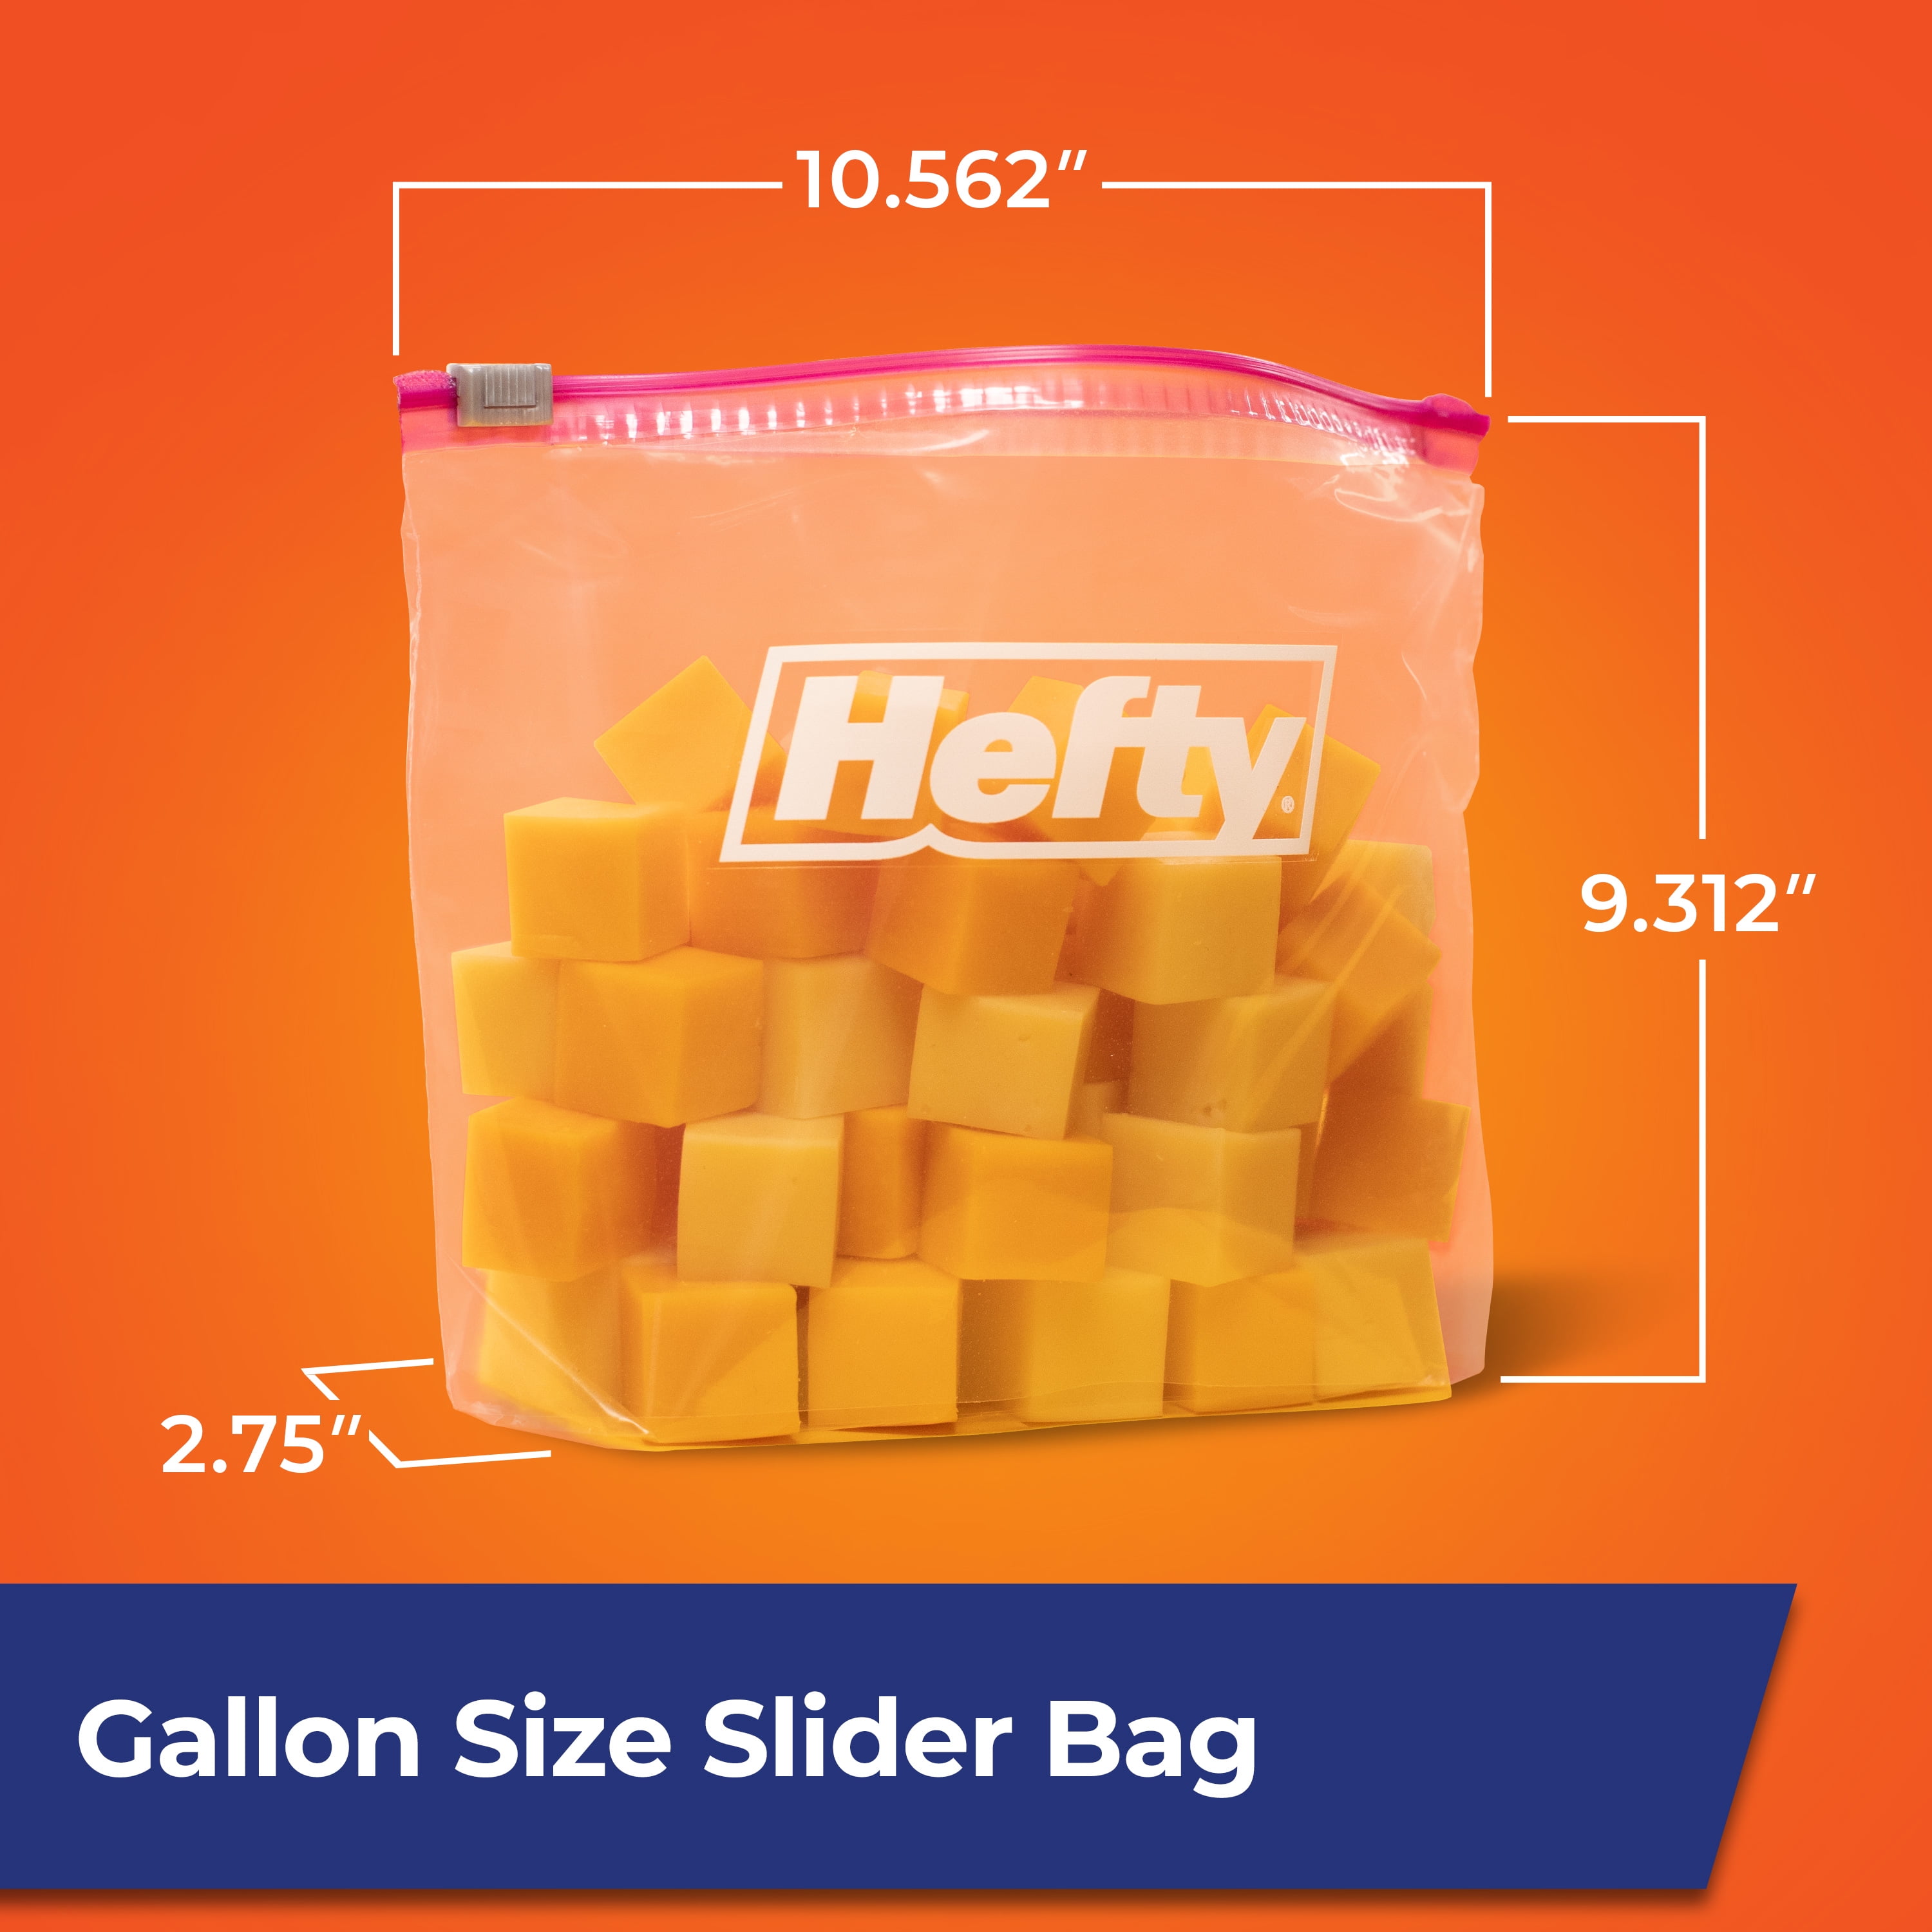  Hefty Slider Storage Calendar Bags, Half-Gallon Size, 128 Count  : Health & Household